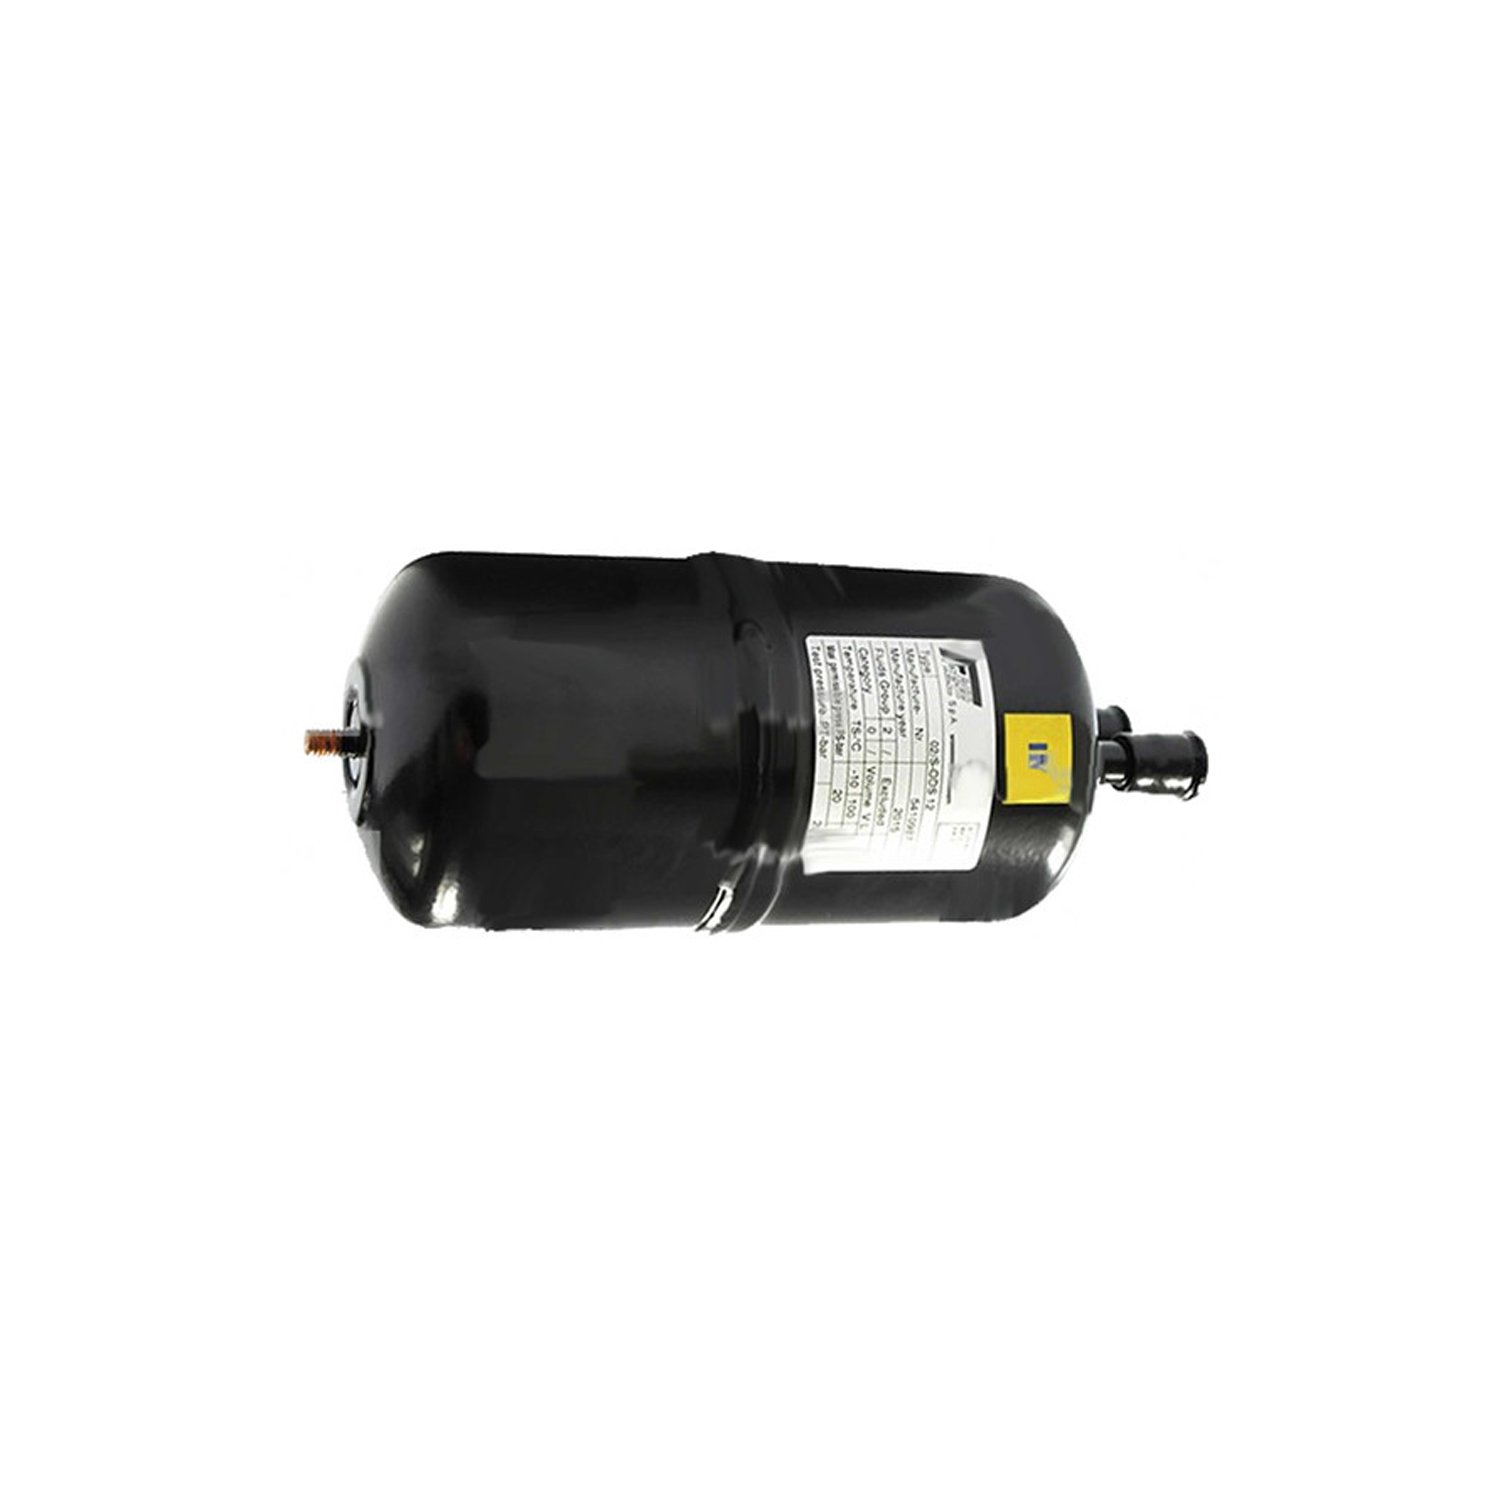 Séparateur de liquide Frigomec 03 / S 16 mm, volume: 1,6 l, raccordement: 16 mm ODS